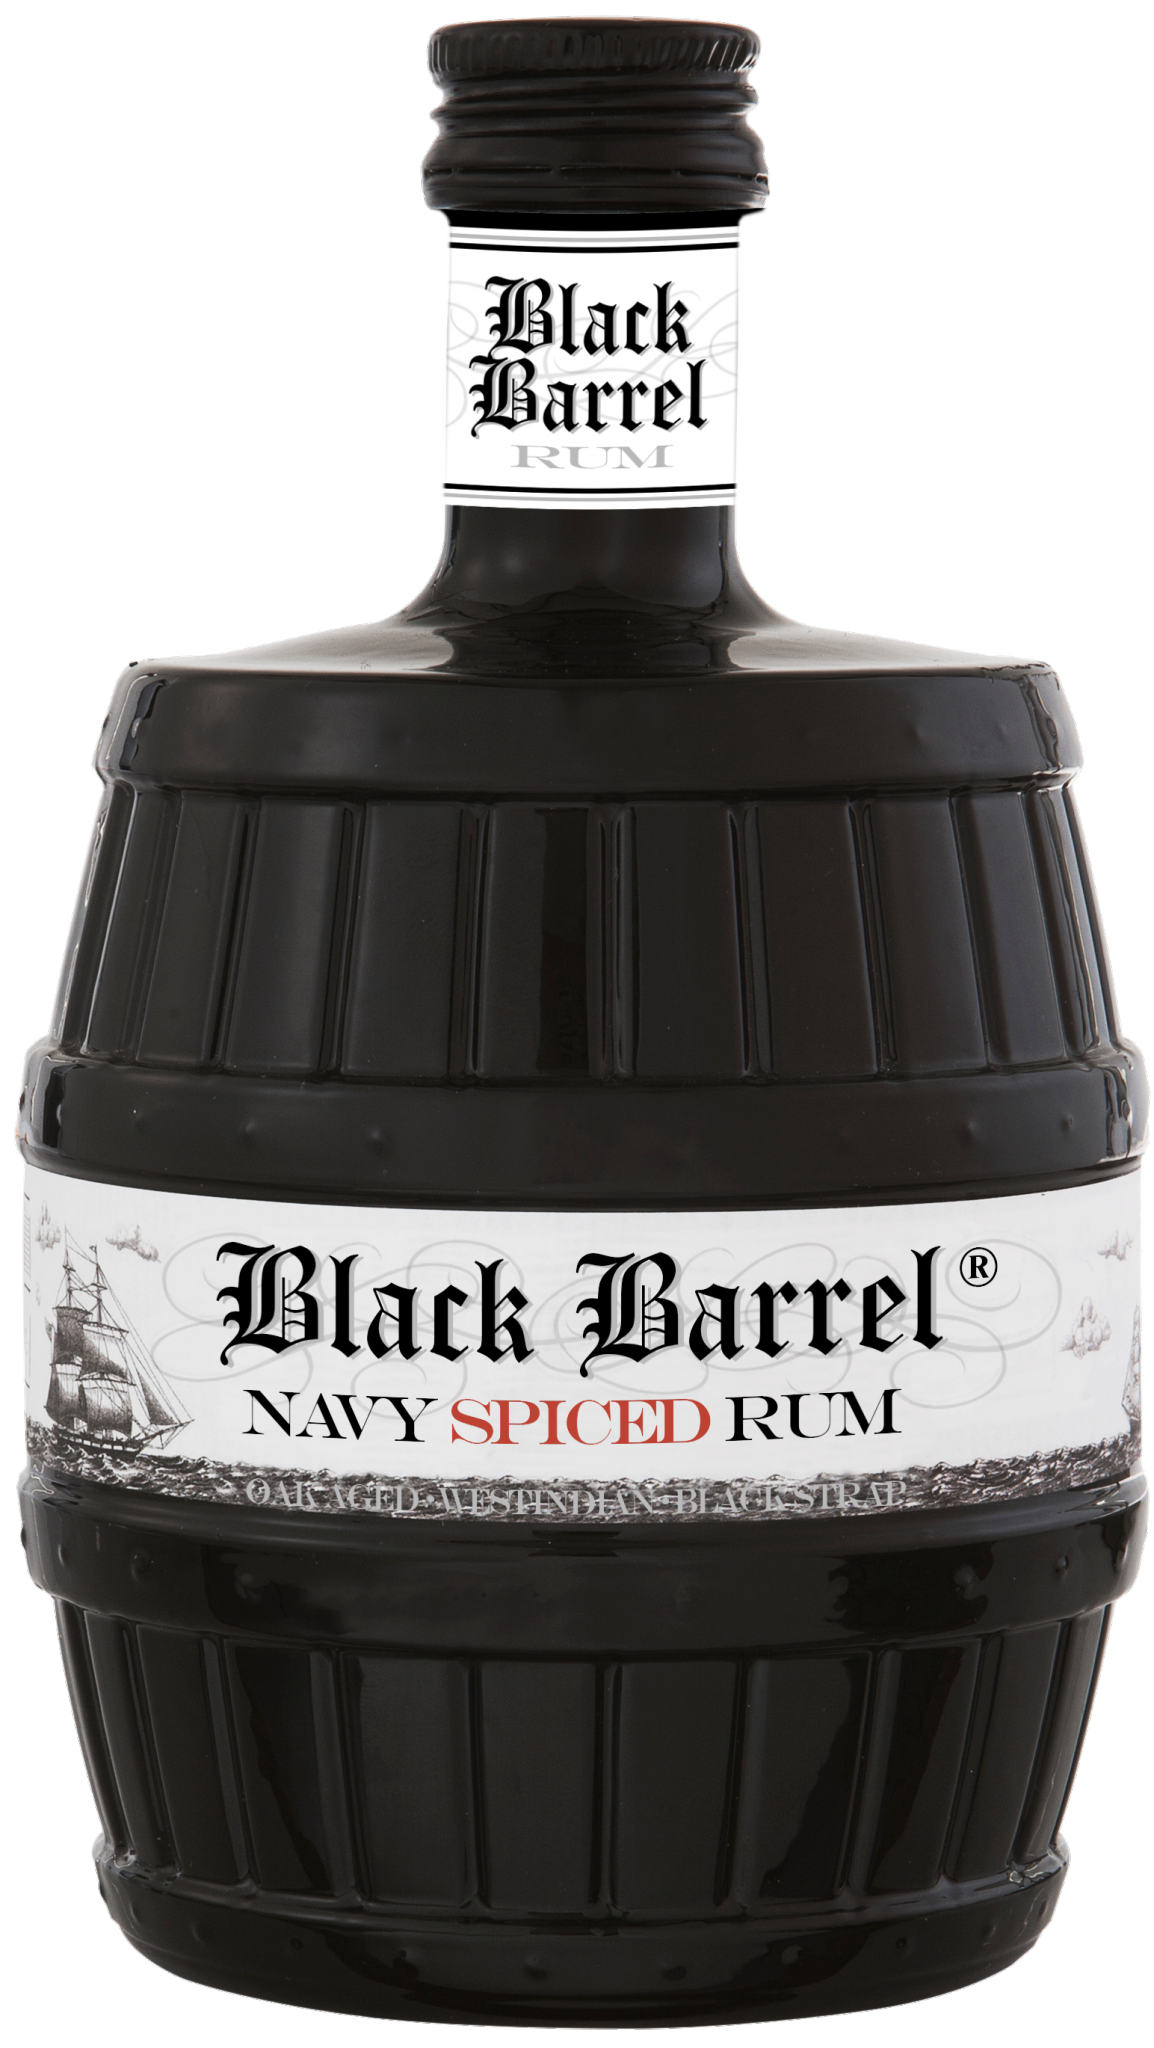 A.H. Riise Black Barrel Navy